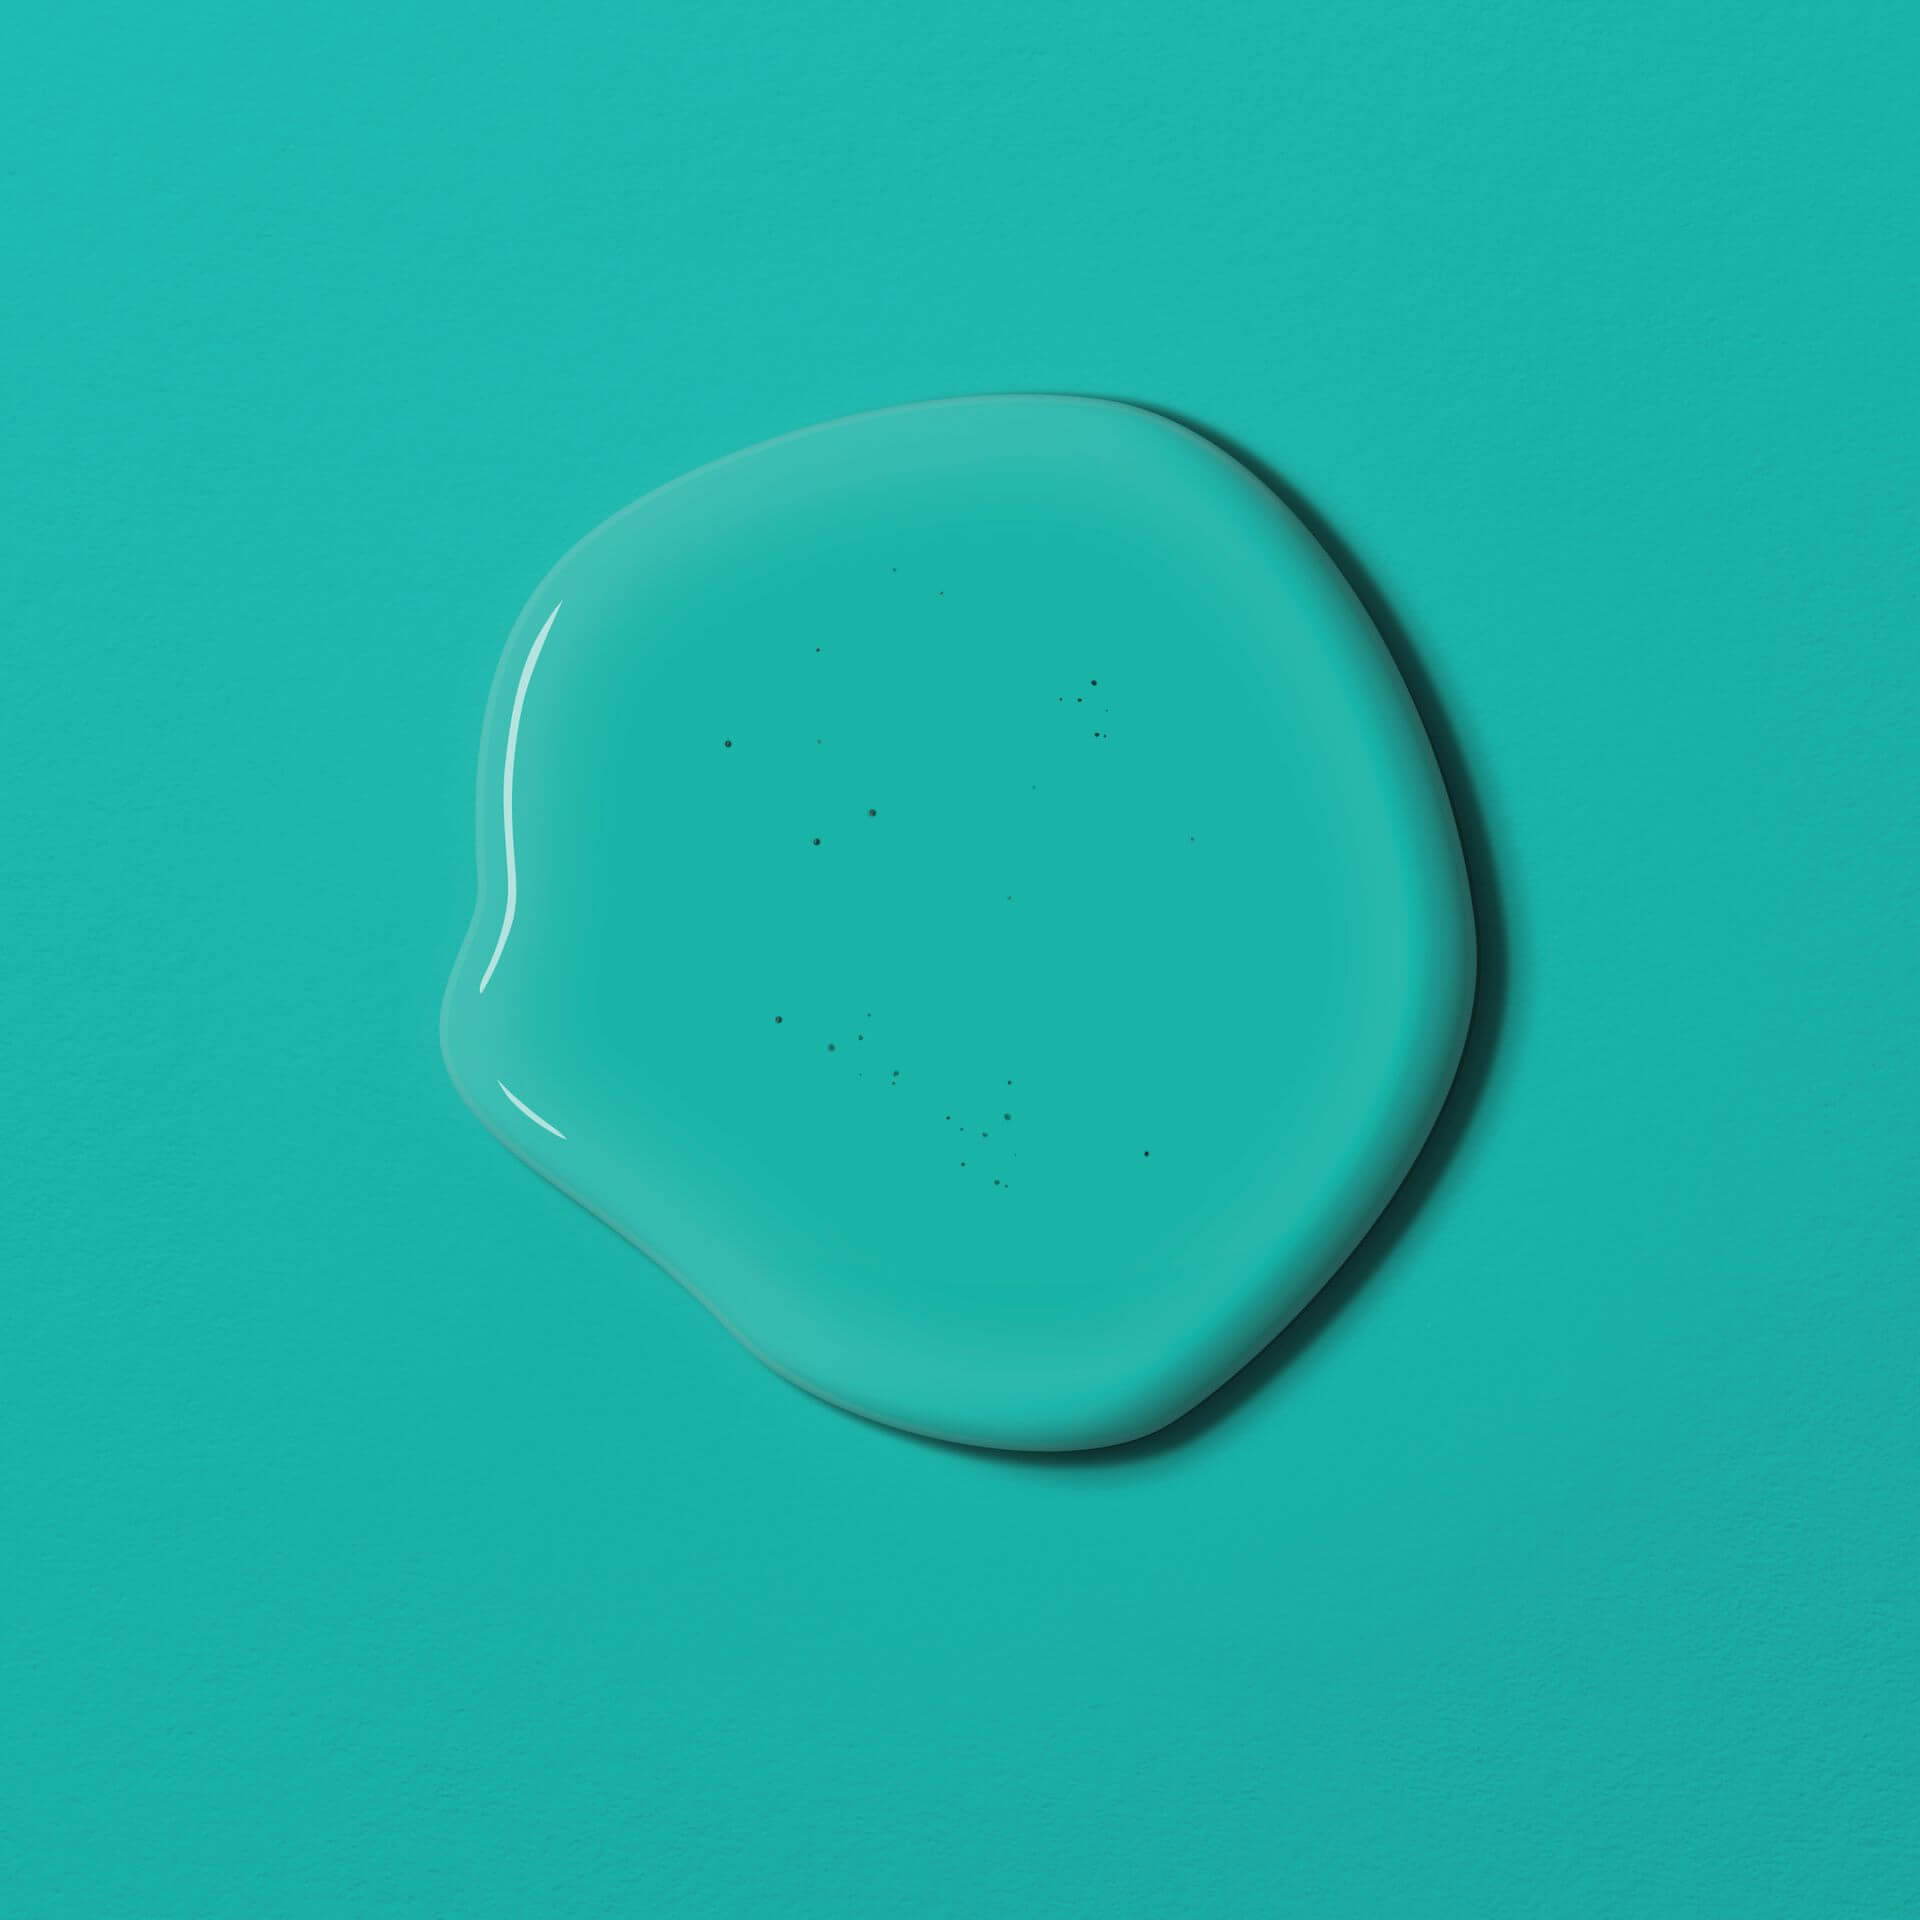 MissPompadour Groen met Turquoise - Eggshell lak 1L